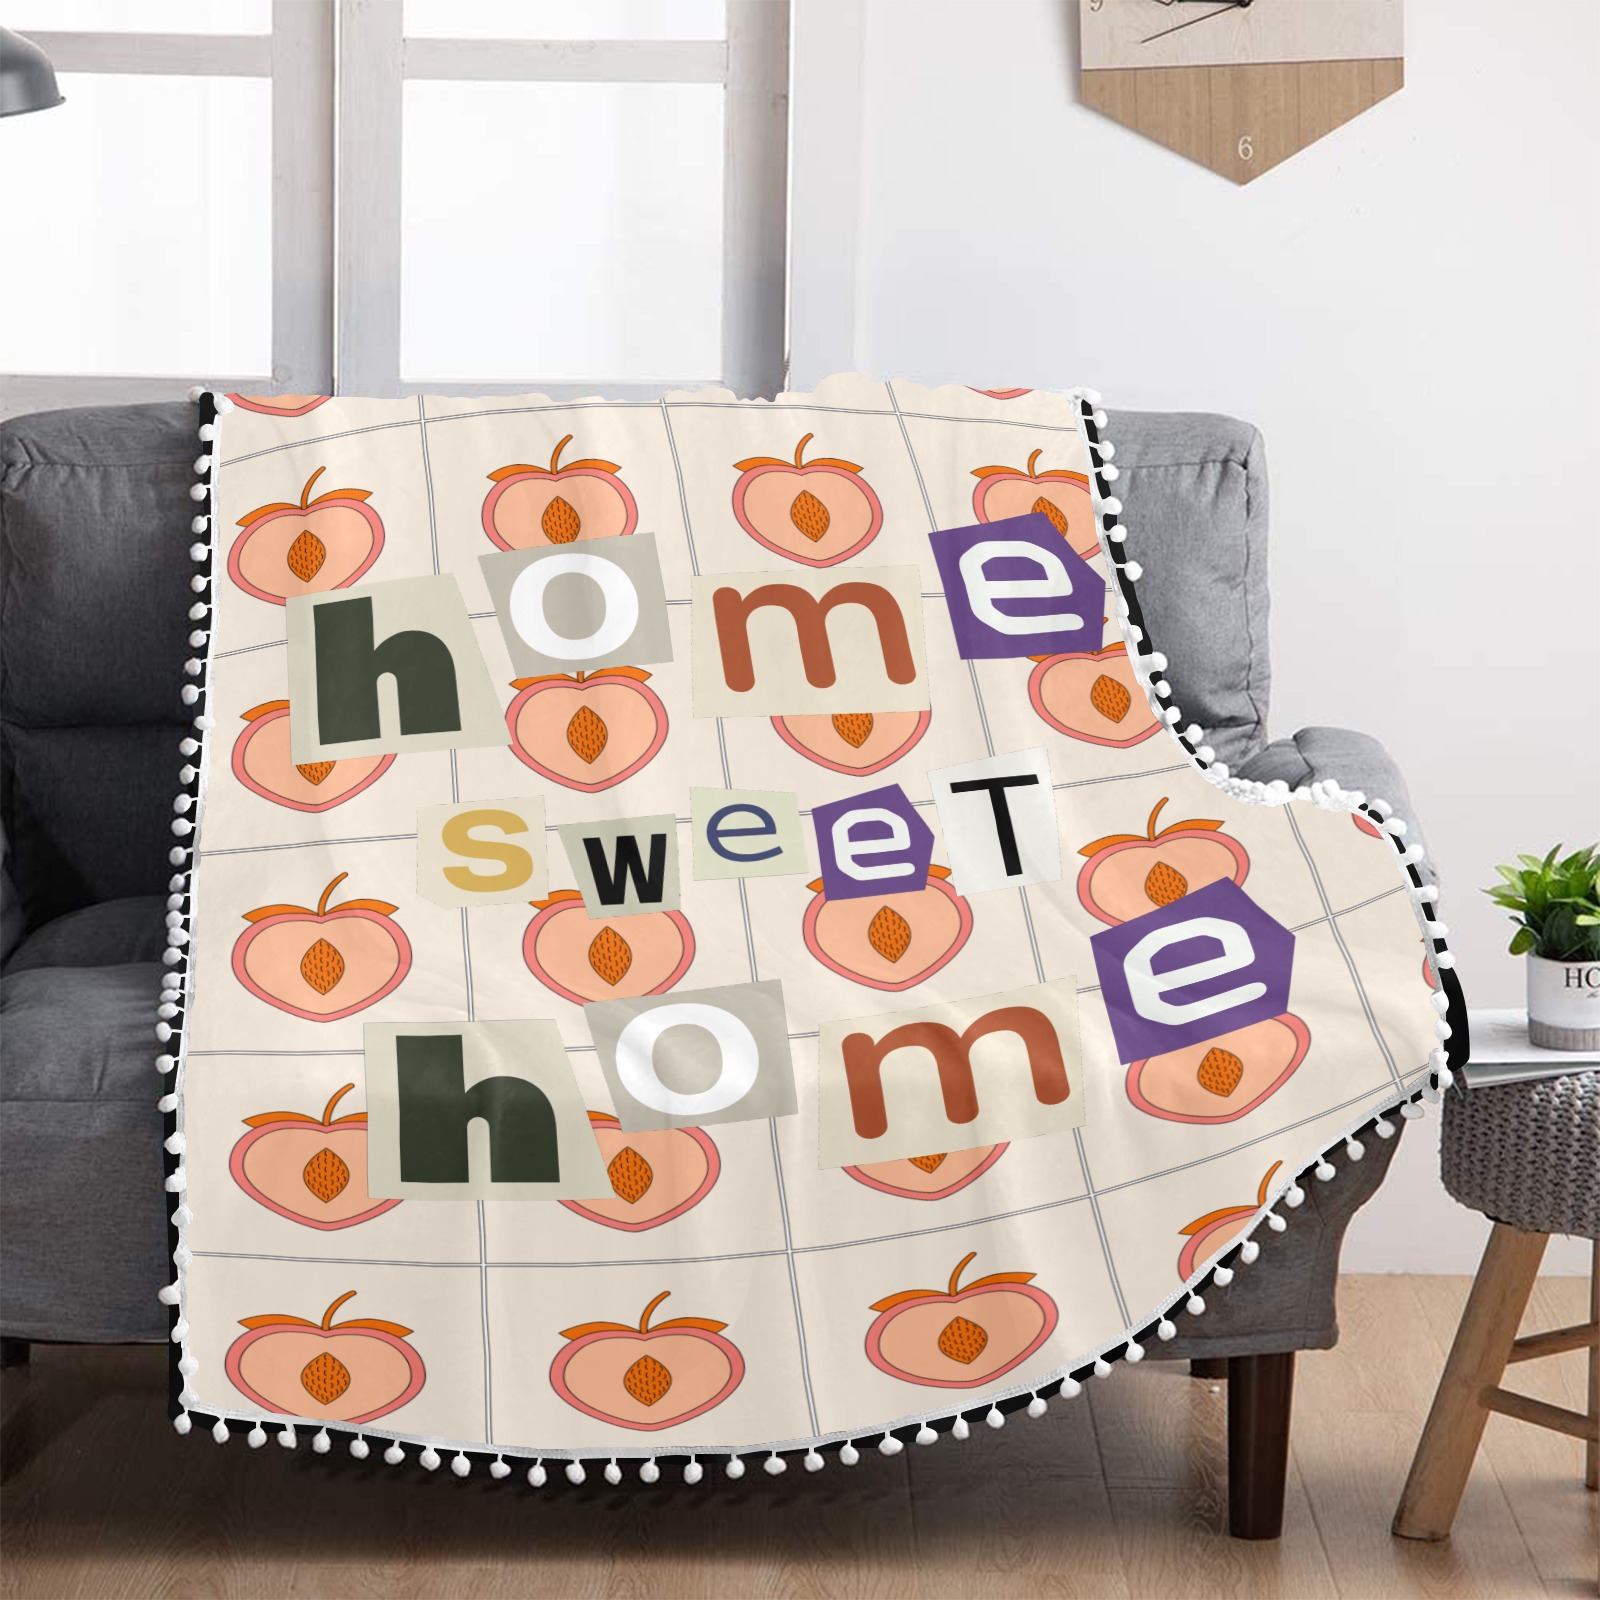 Home Sweet Home Blanket Pom Pom Fringe Blanket 30"x40"